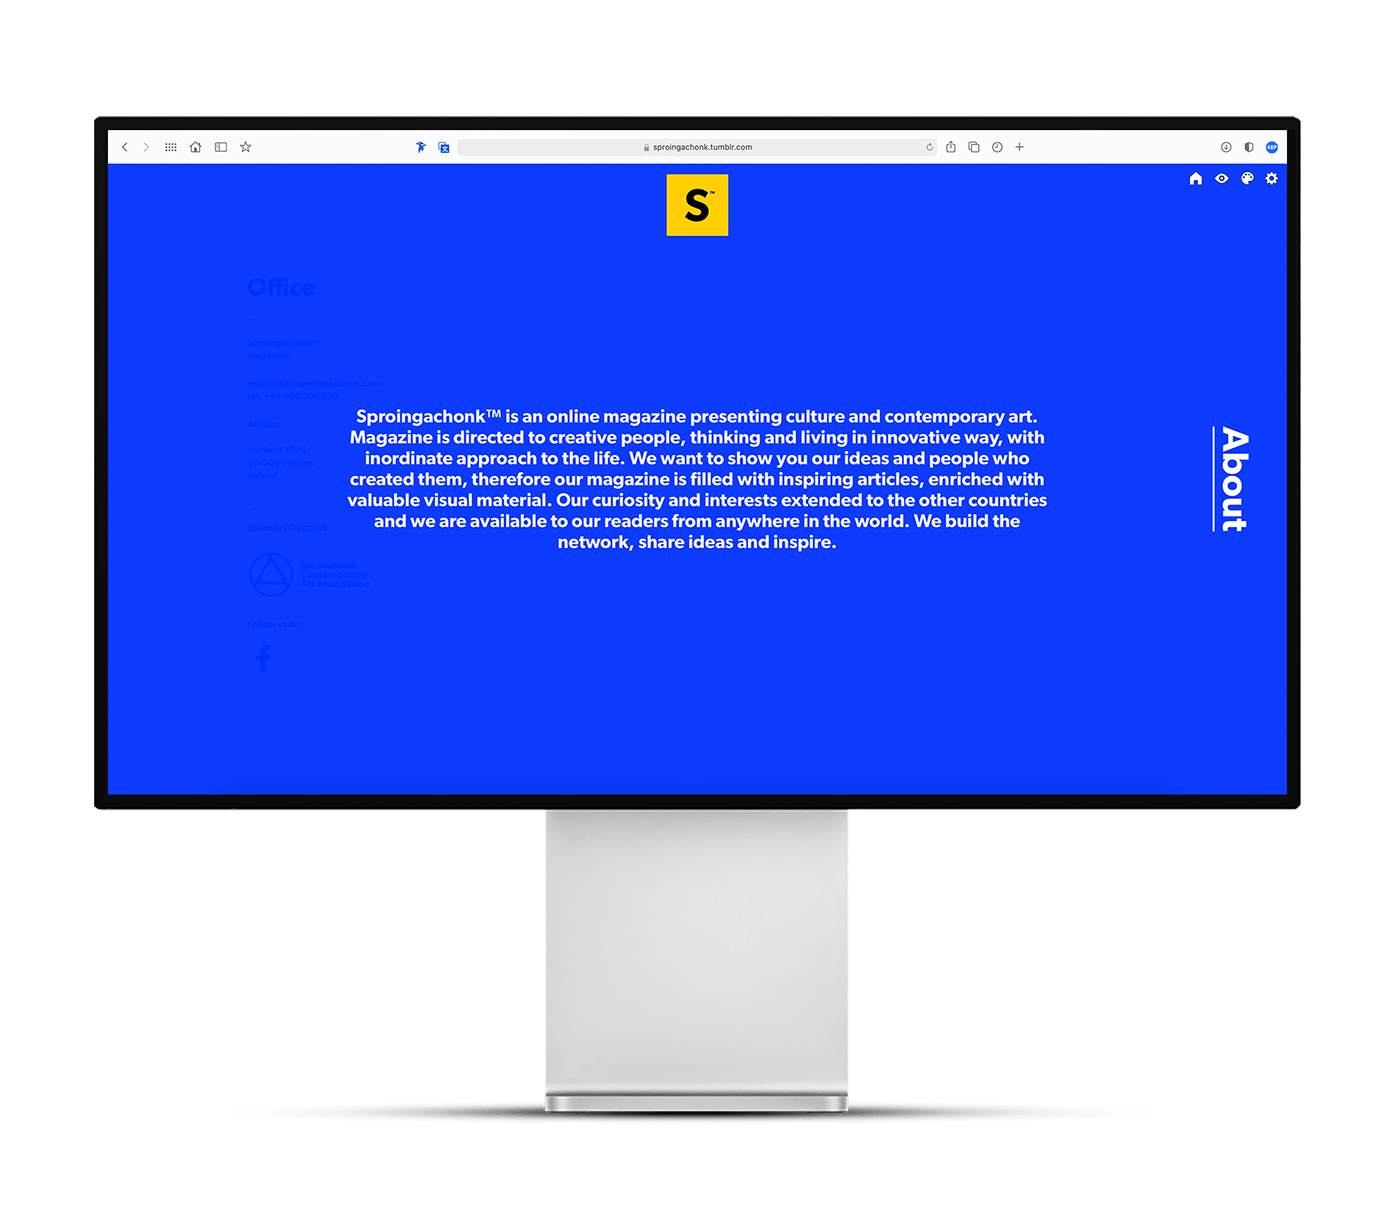 kosma ostrowski UX UI Web Design  Blog Website